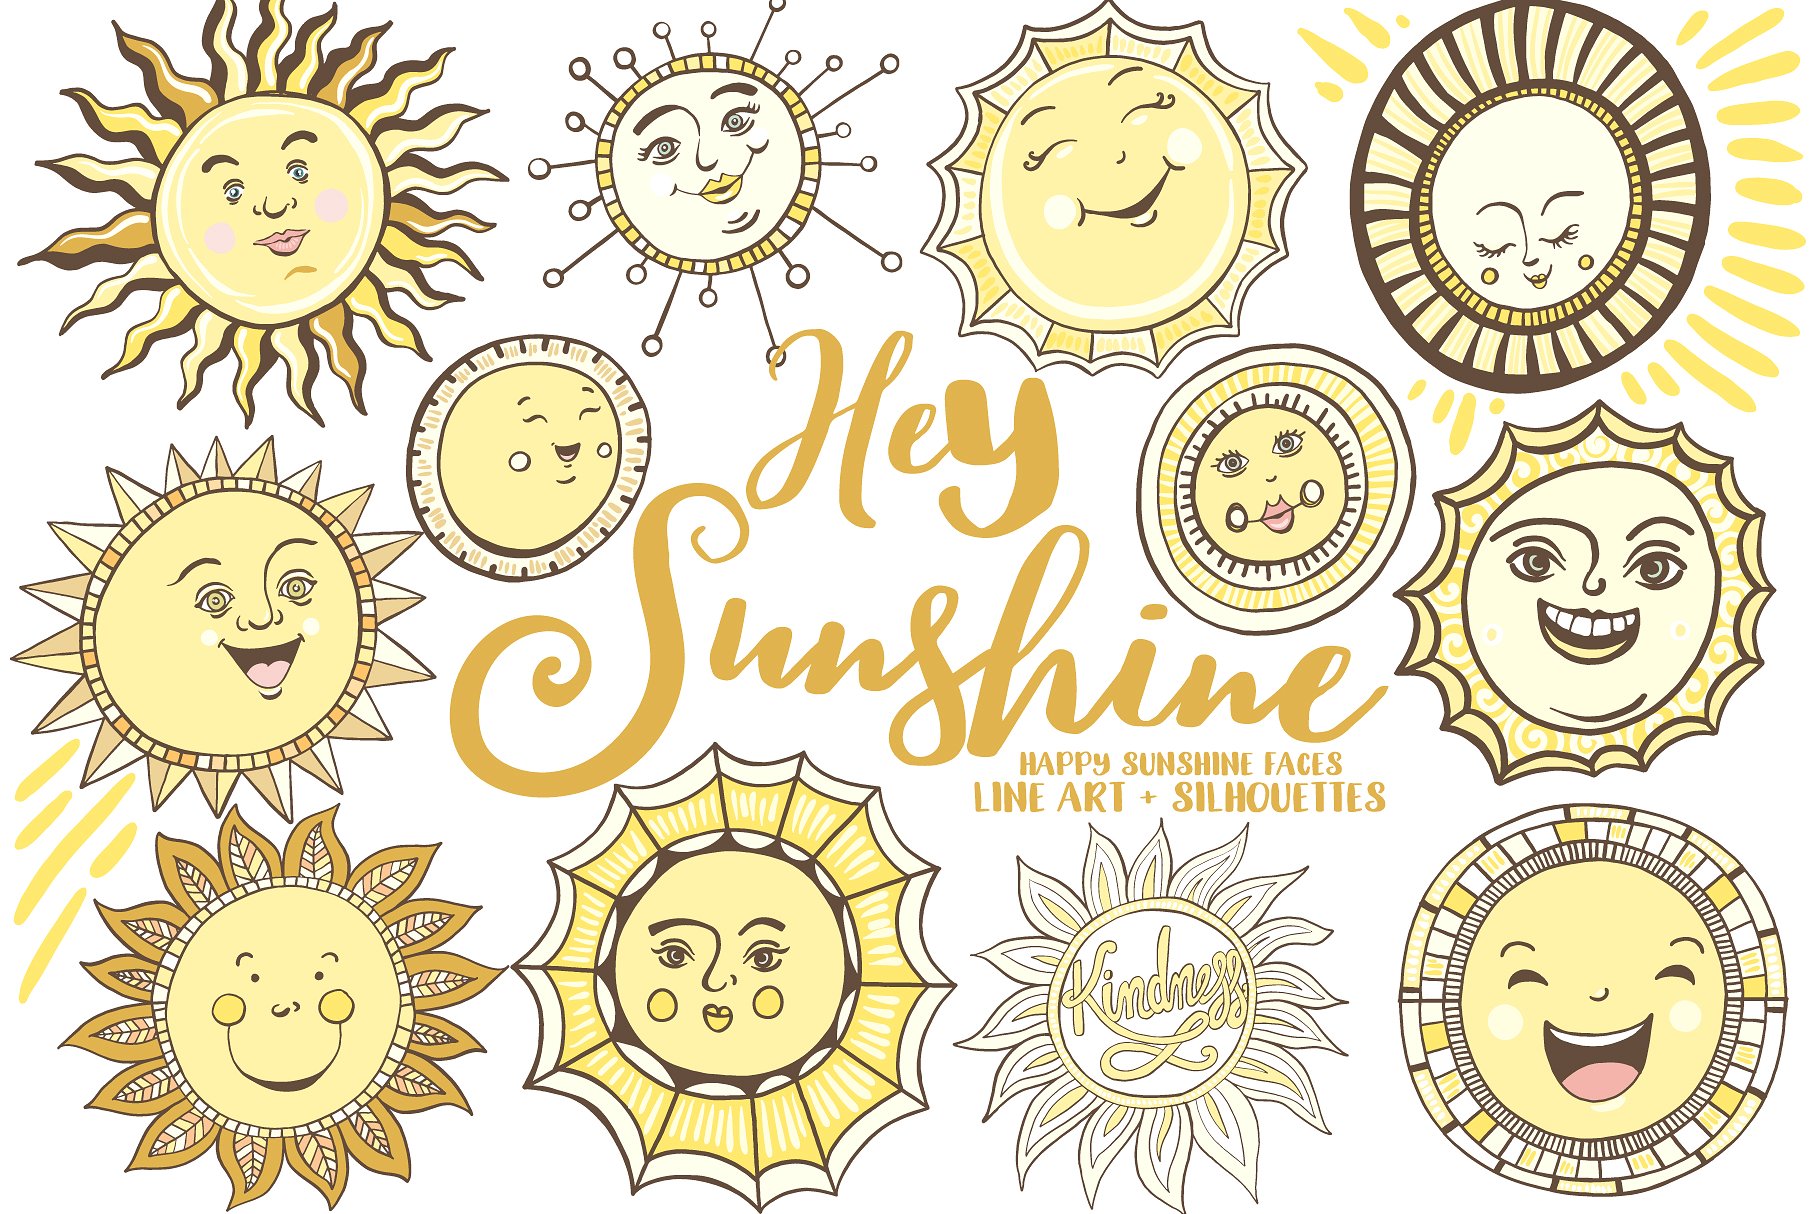 夏季太阳主题人物笑脸插画 Sunshine Face Illustrations插图